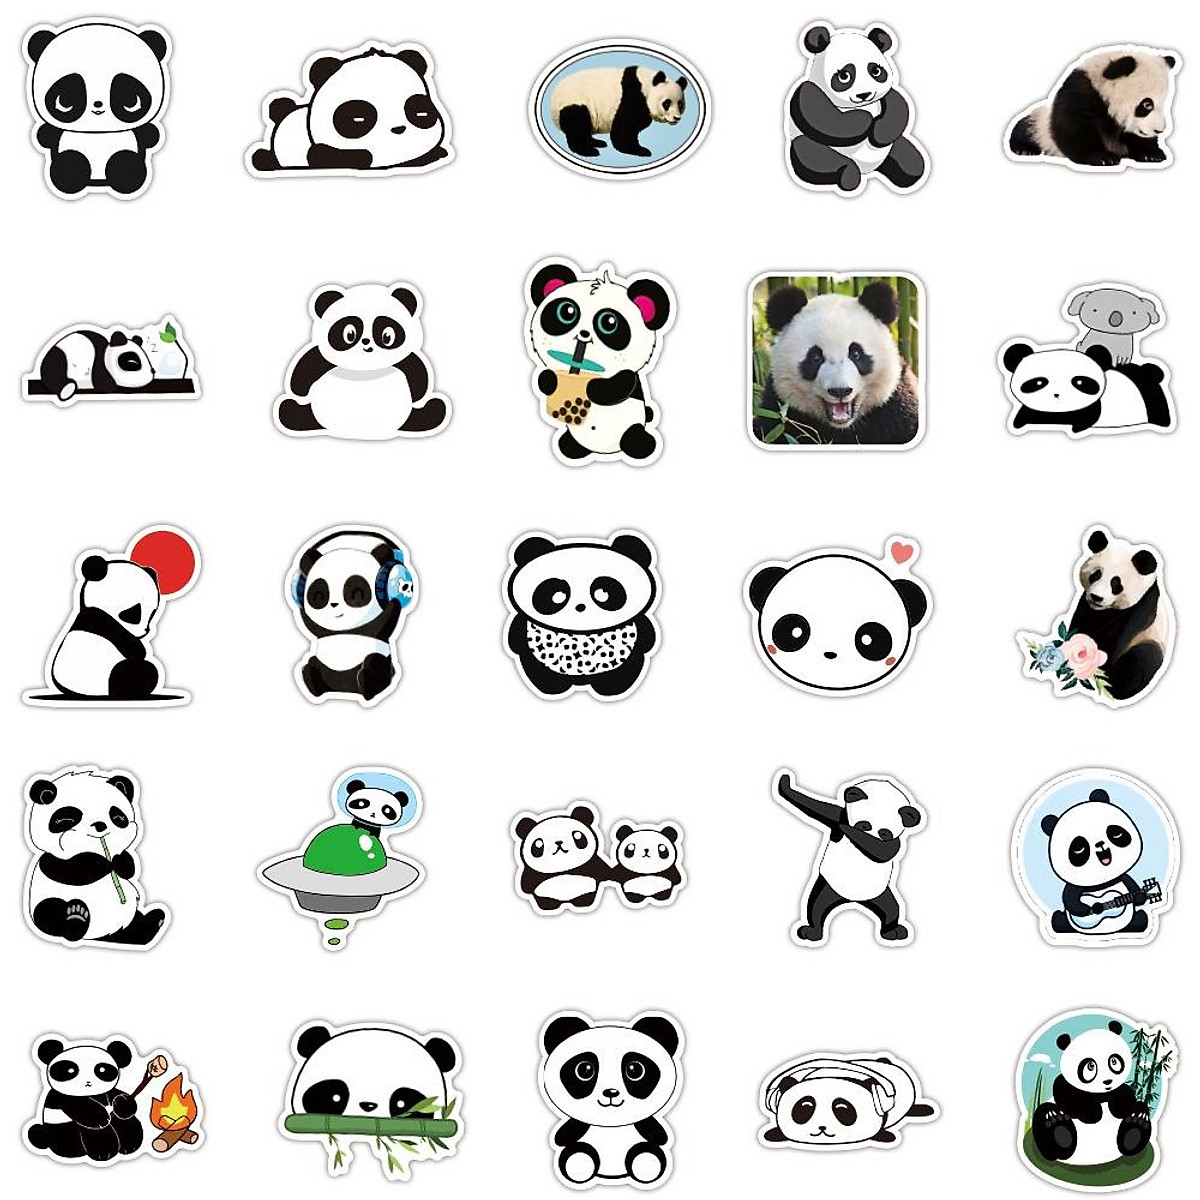 Mua Cute Panda Stickers Set 100pcs Waterproof Decals Vinyl for ...